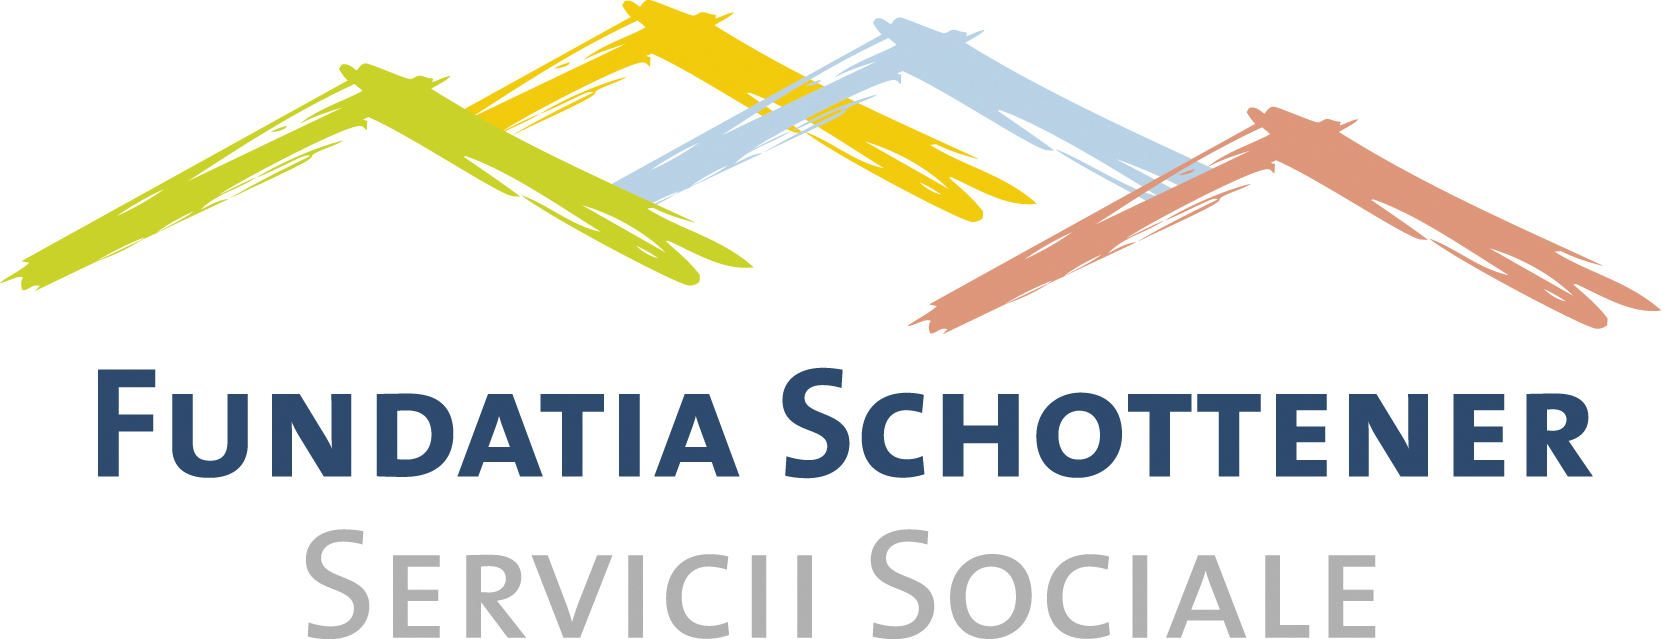 Fundatia Schottener Servicii Sociale  logo